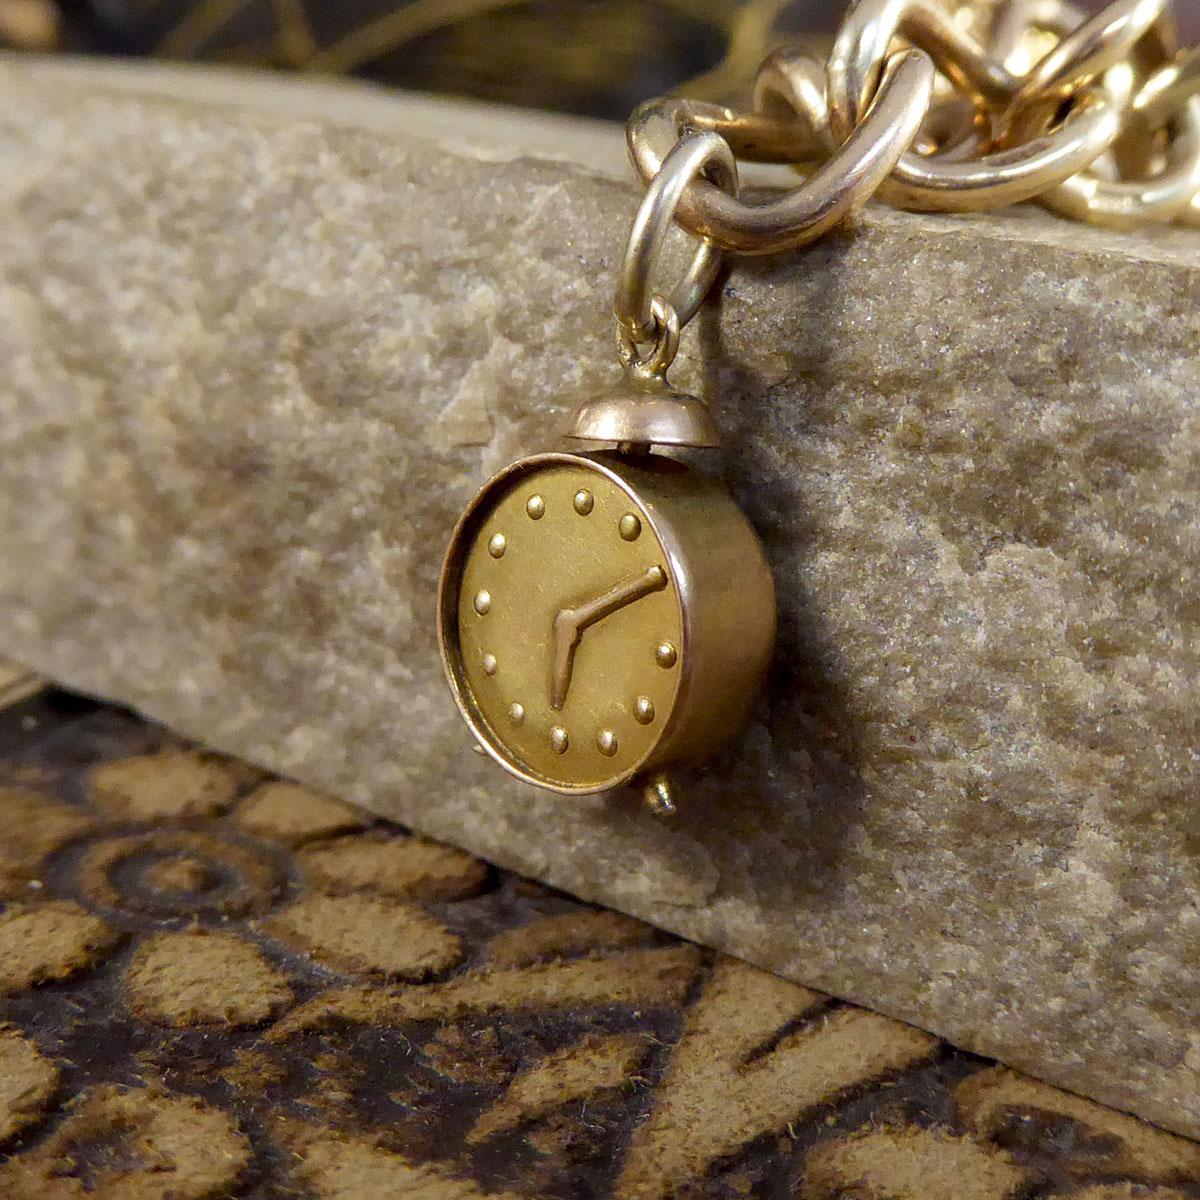 Retro Vintage Alice in Wonderland Themed Charm Bracelet in 9ct Yellow Gold